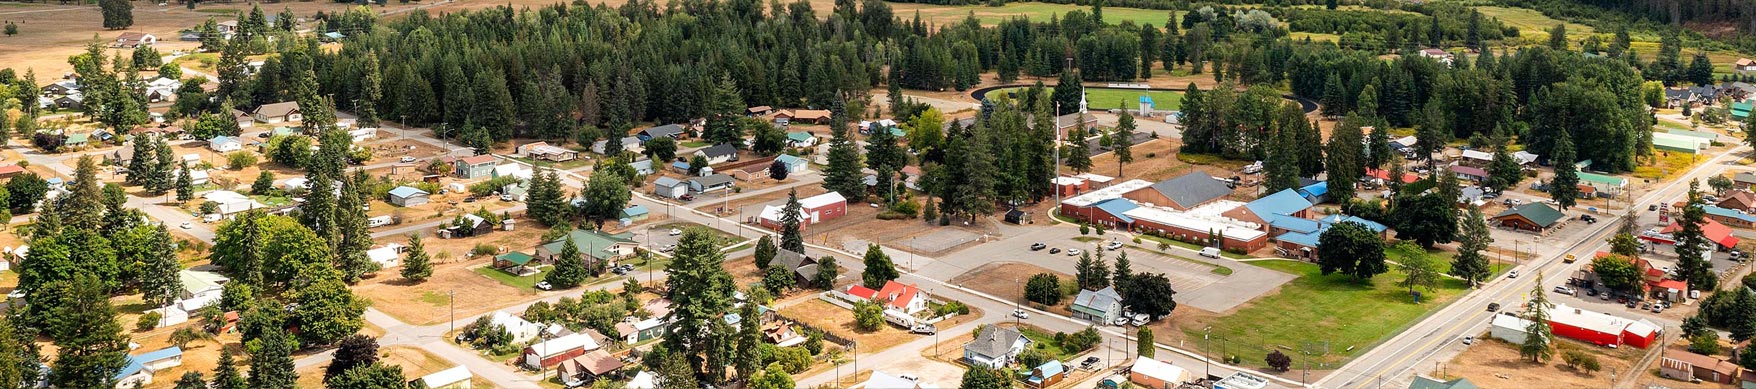 The Historical City of Clark Fork, Idaho